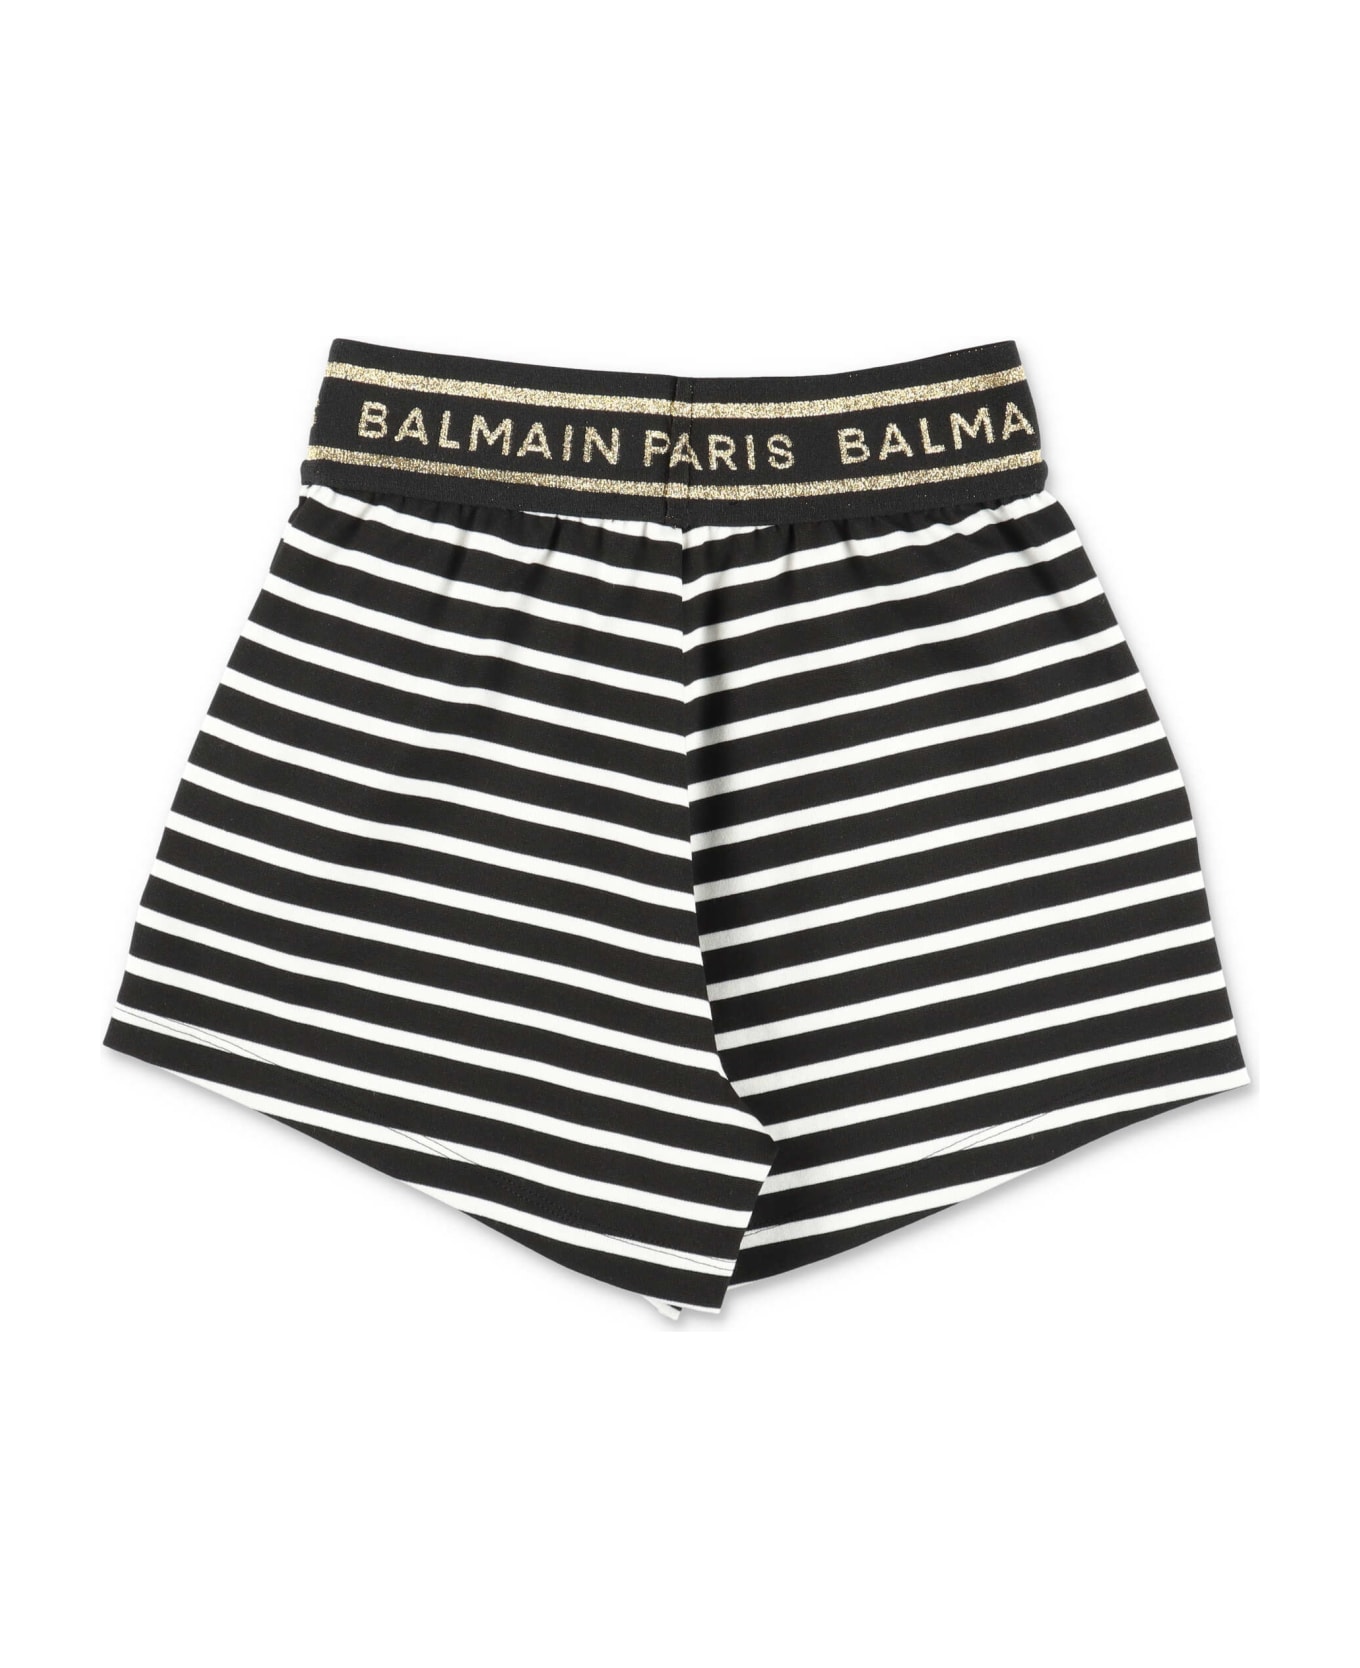 Balmain Shorts Nero E Bianco In Misto Viscosa Bambina - White/black